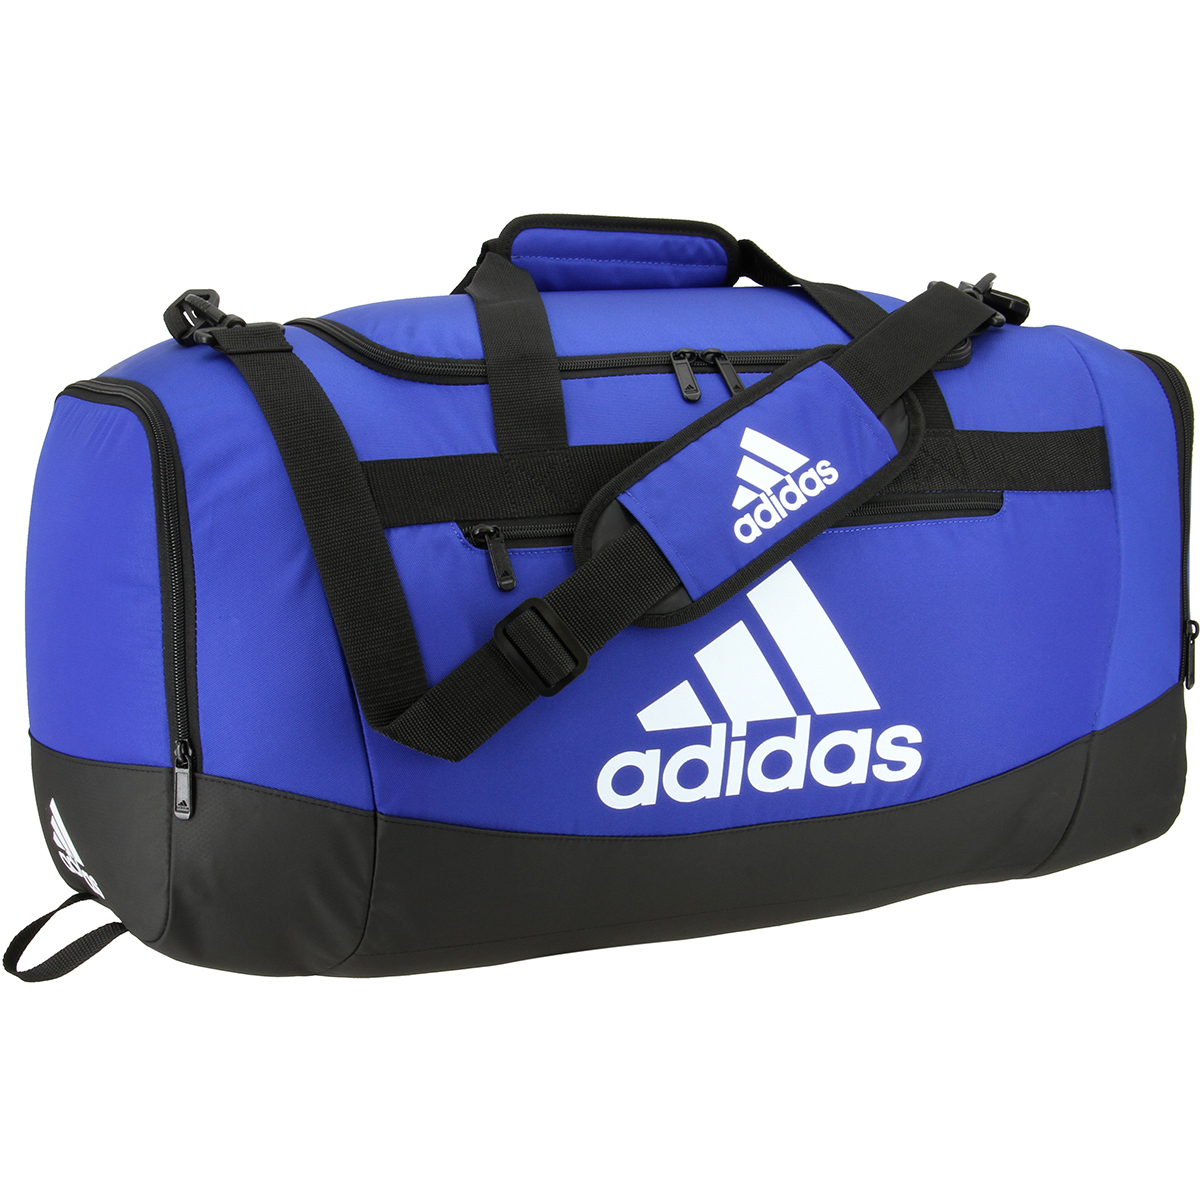 Adidas Defender Iv Duffle Bag, Medium